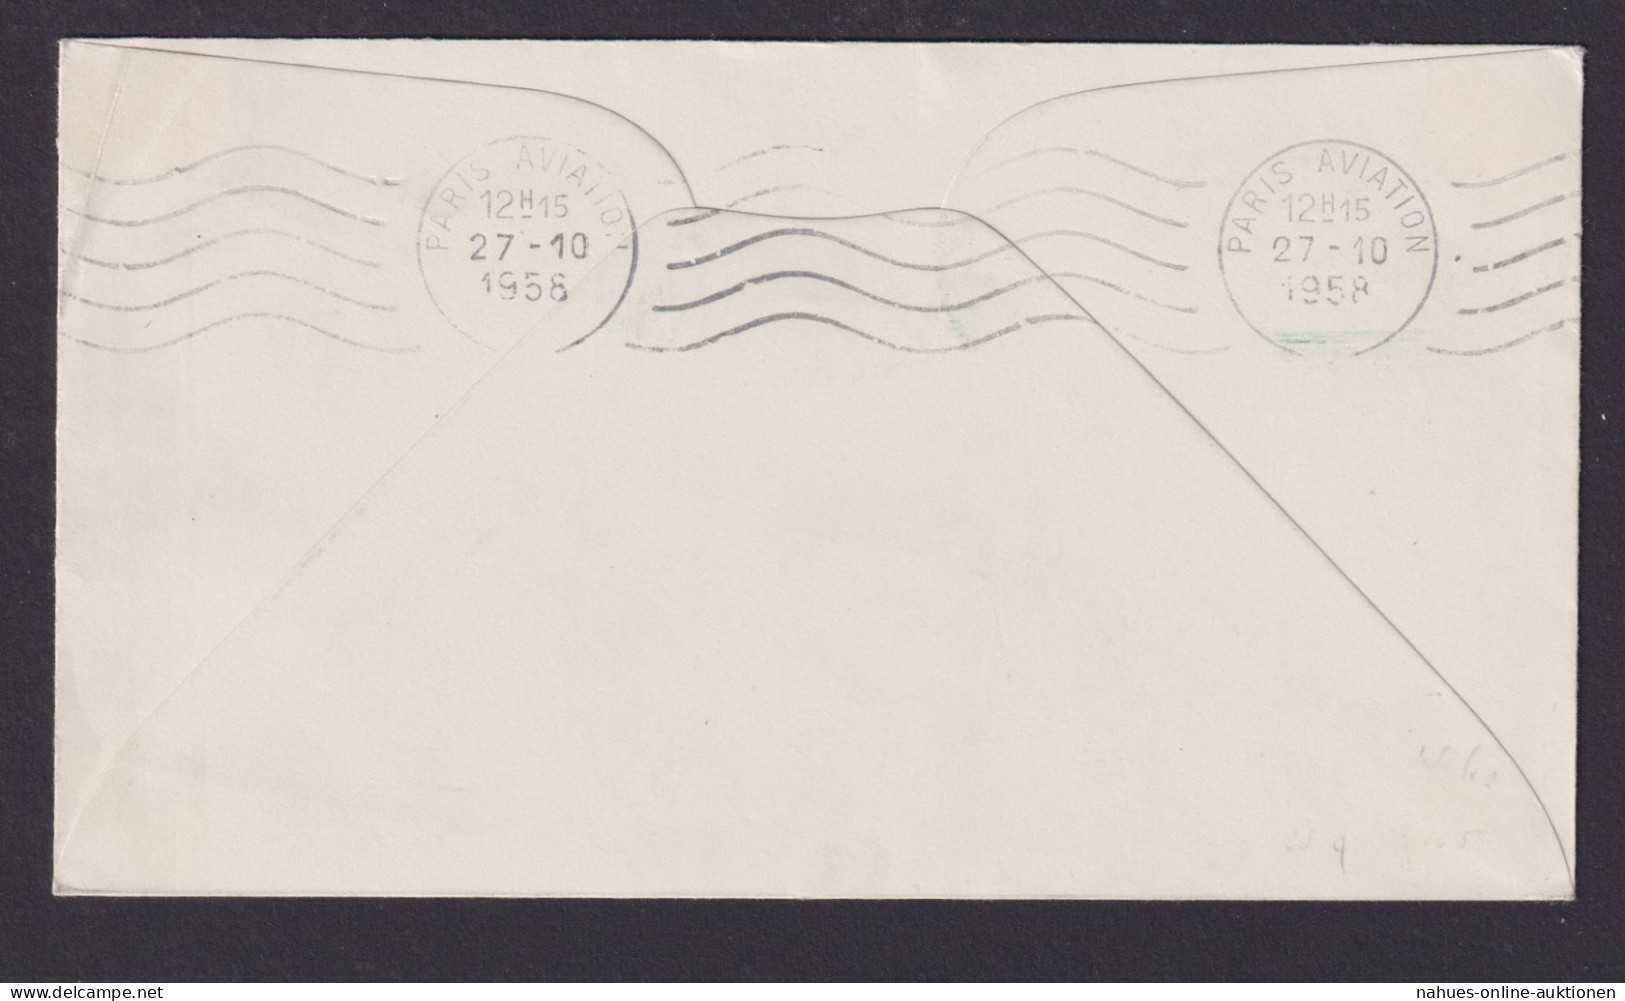 Flugpost Brief Air Mail Pan America Erstflug Jet Clipper New York Paris - Storia Postale